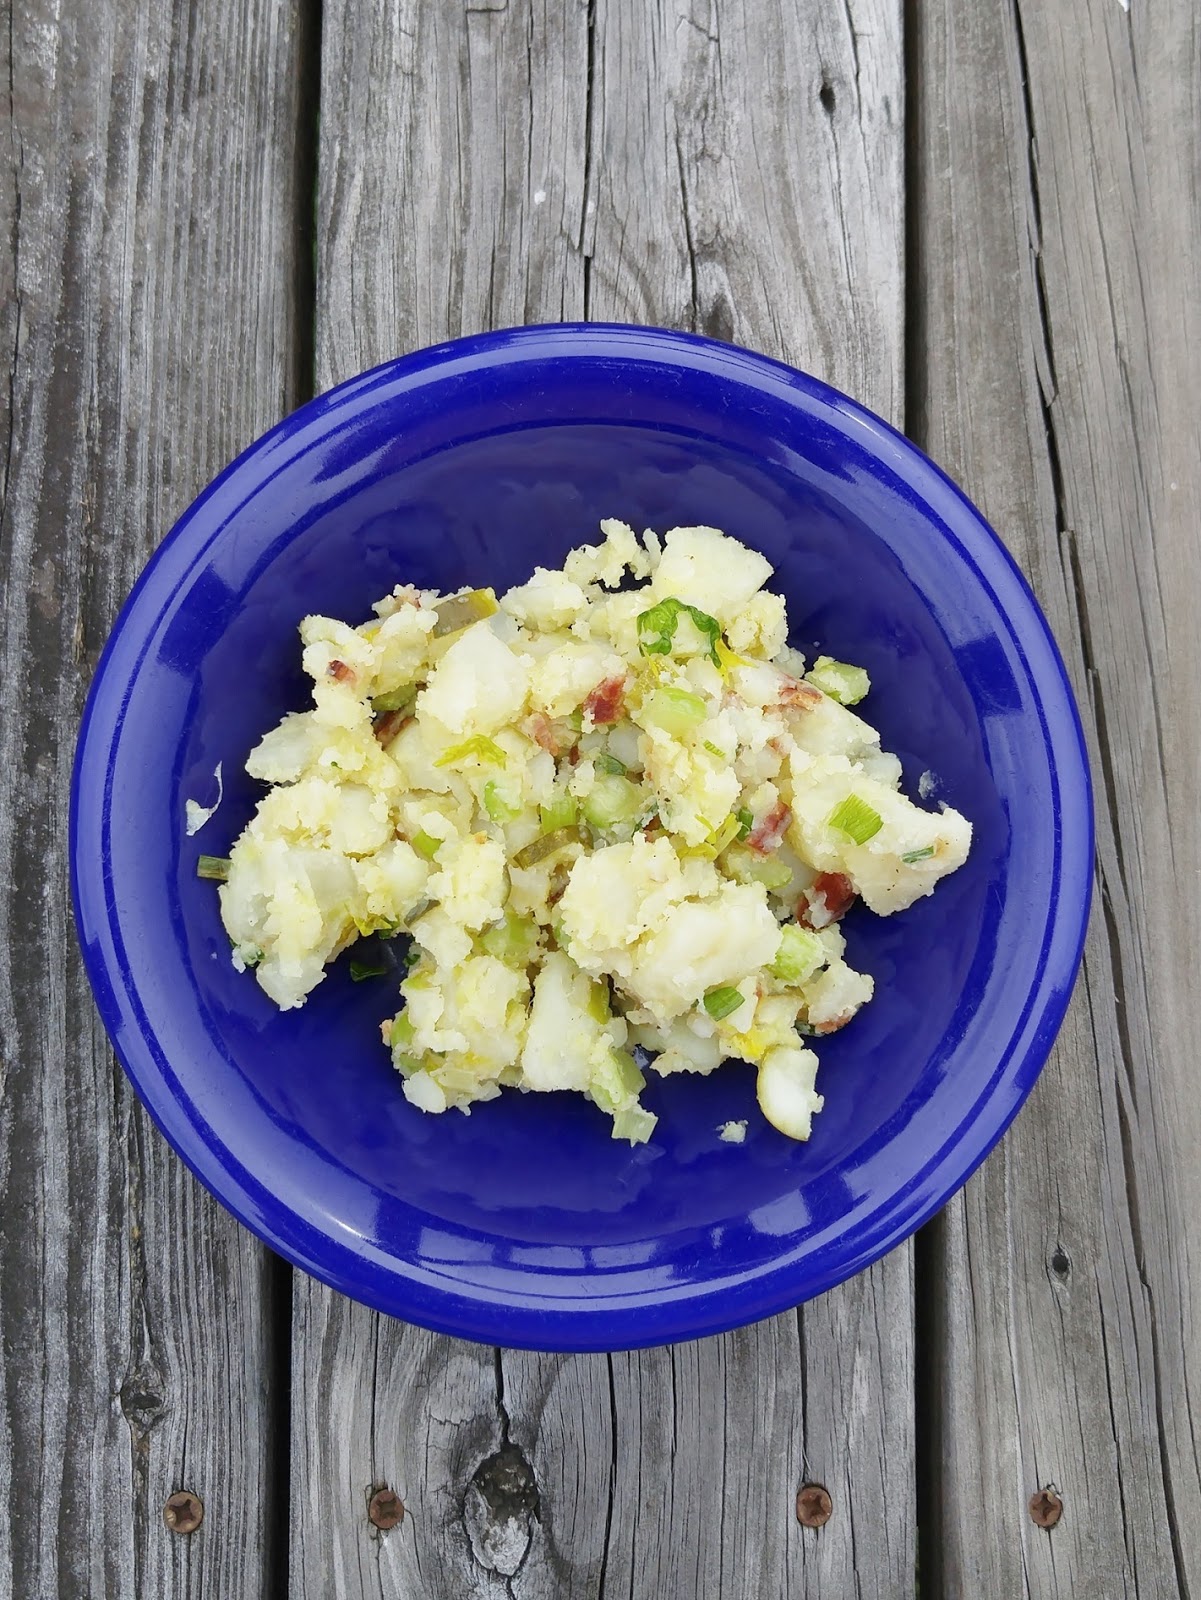 Pan seared Potato, Bacon and Green onion Salad recipe - My WAHM Plan